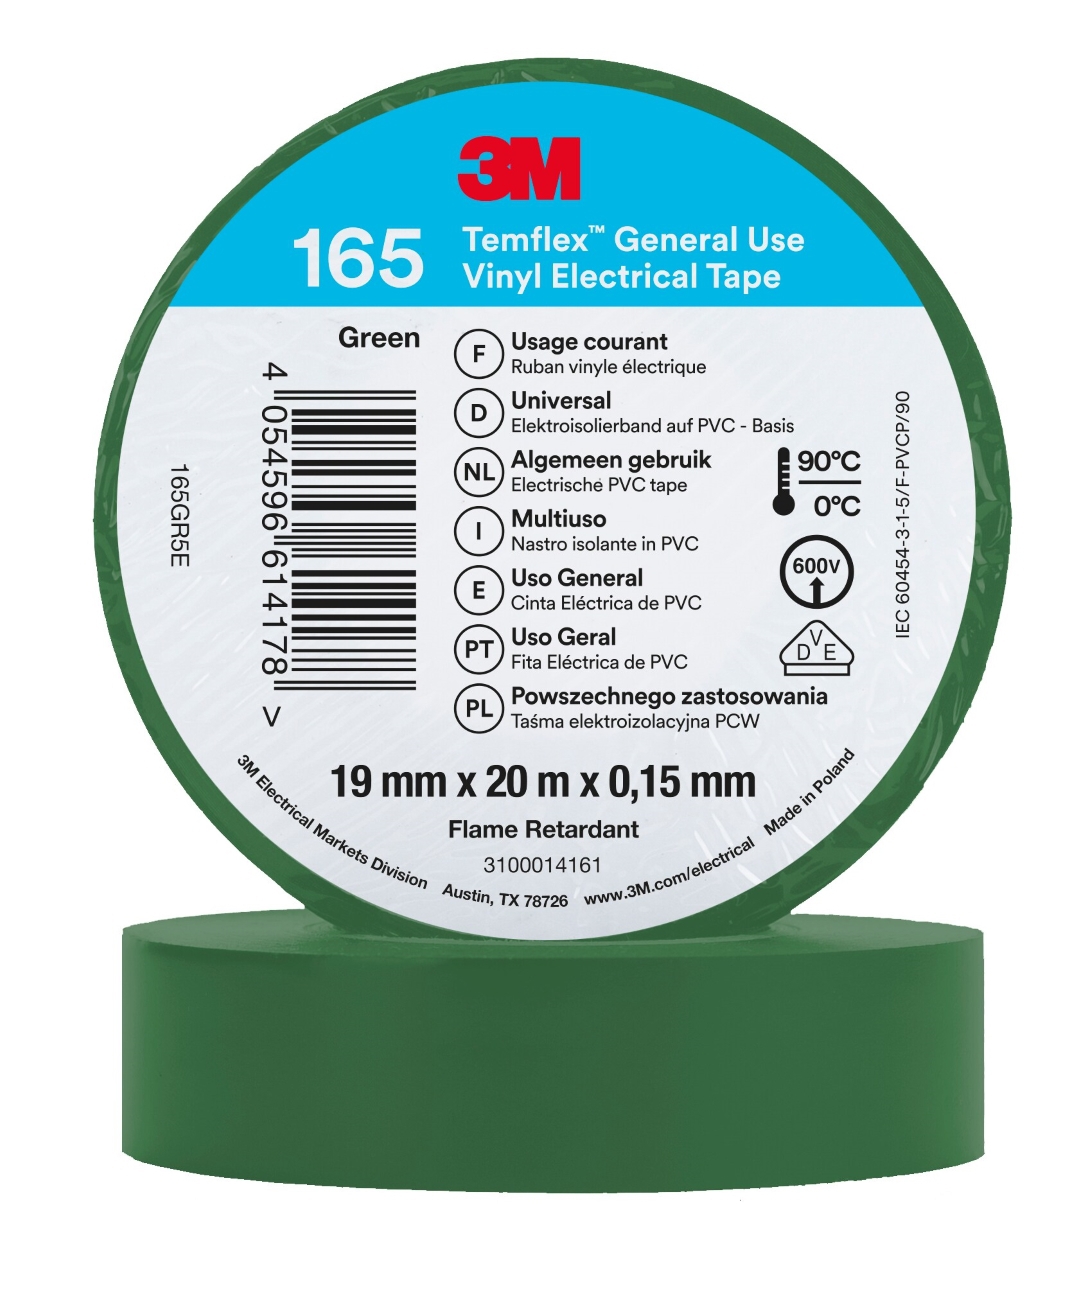 3M Temflex 165 vinyl electrical insulating tape, green, 19 mm x 20 m, 0.15 mm